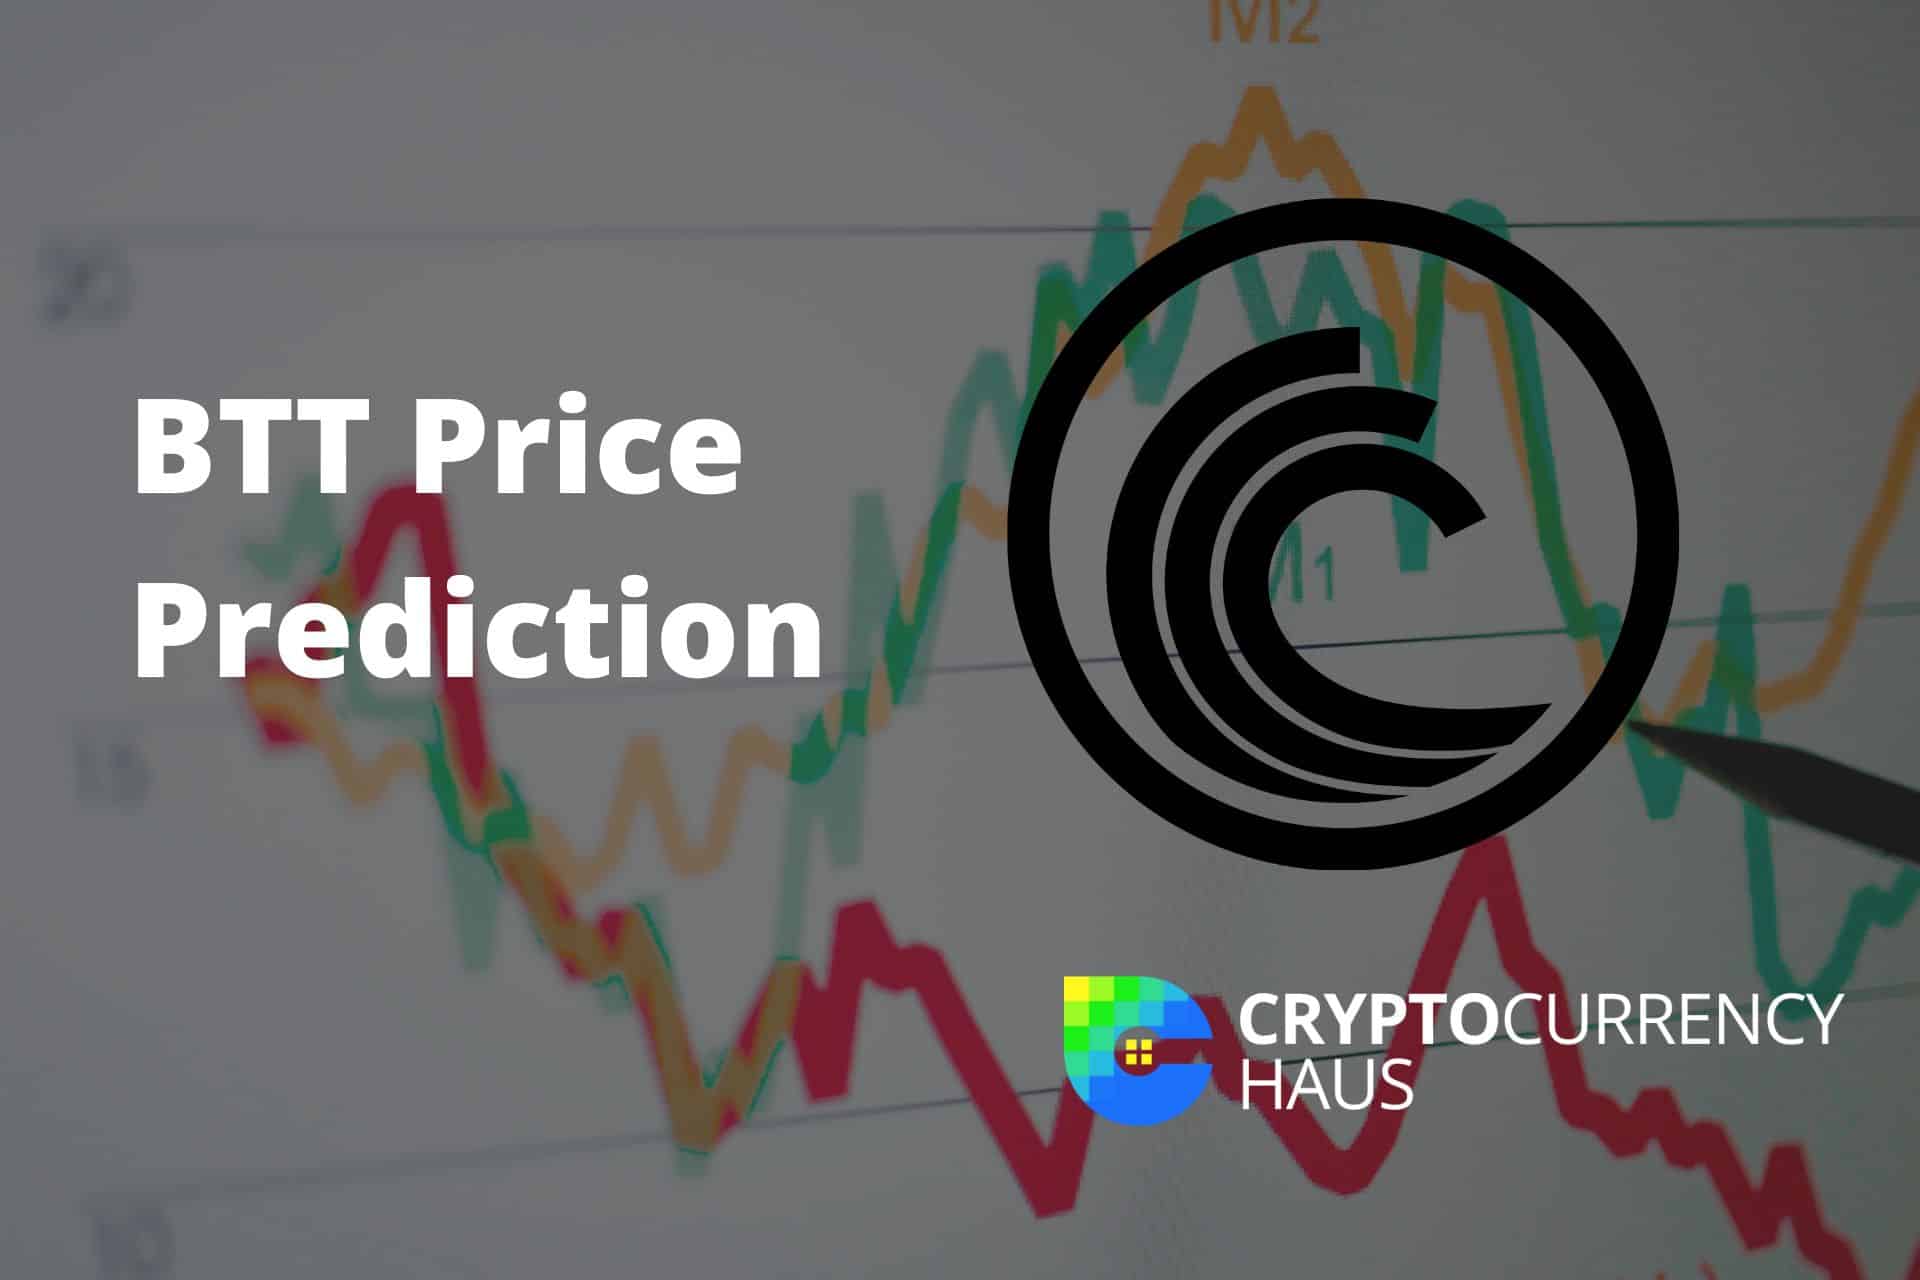 bittorrent coin price prediction 2030